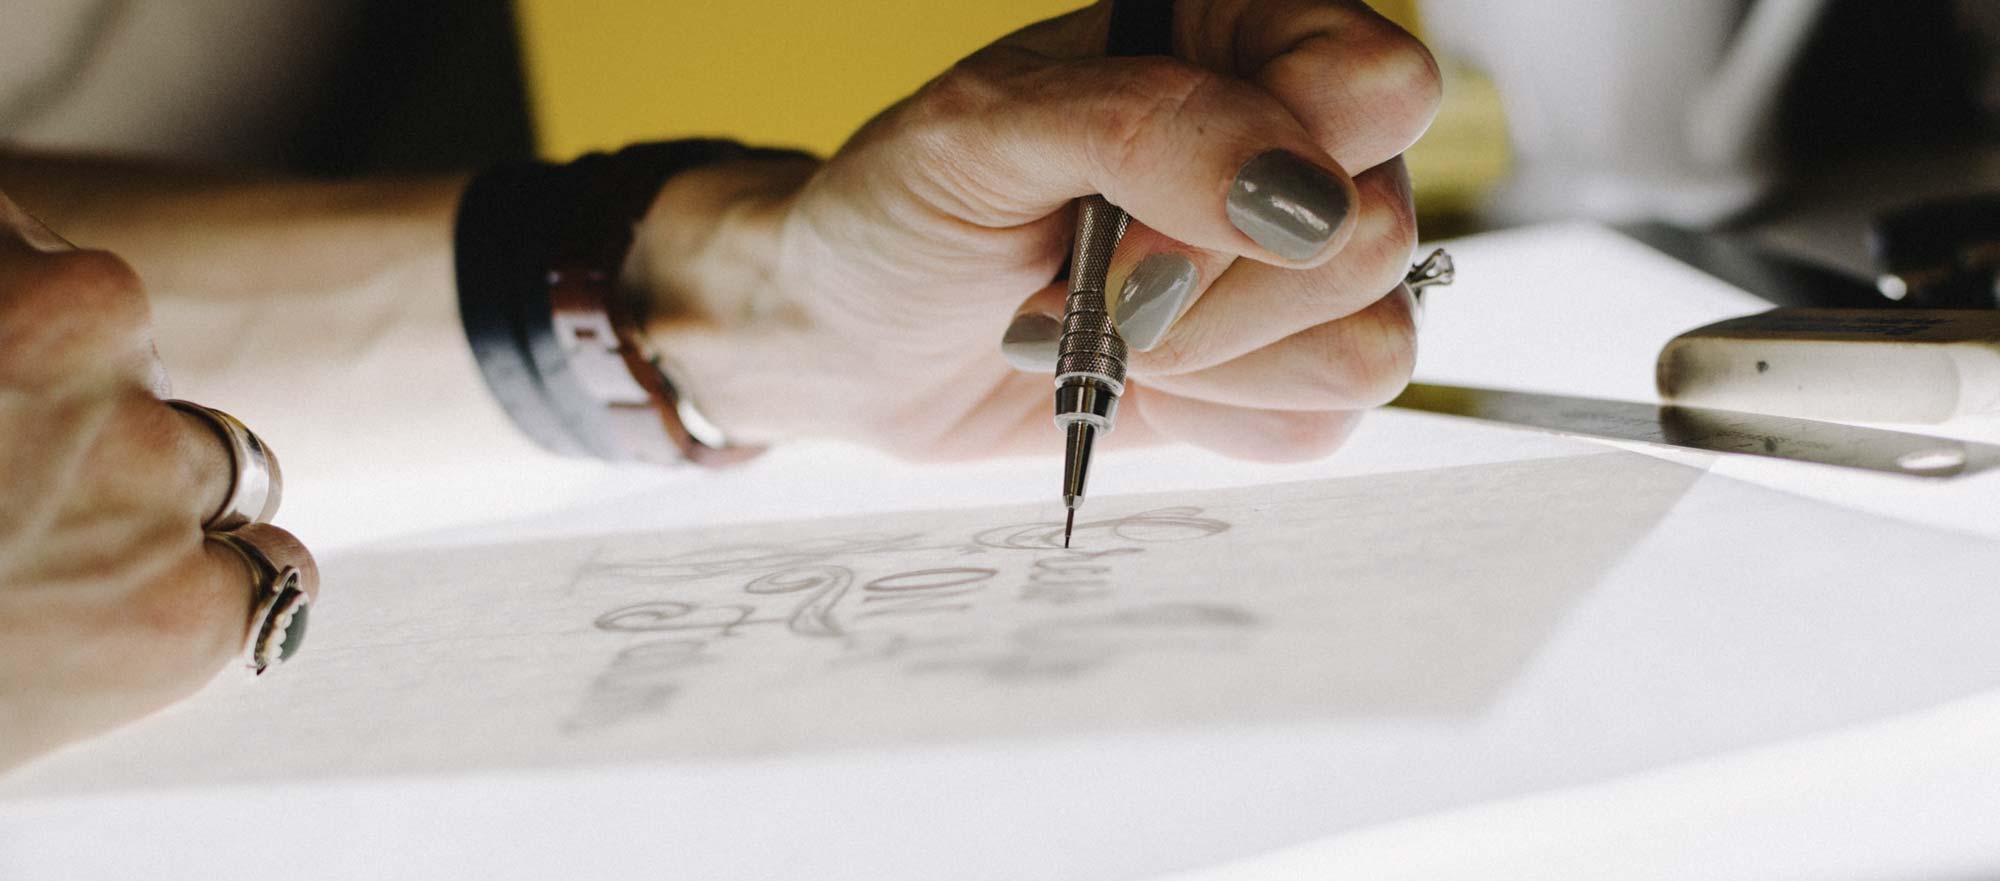 woman drawing logos